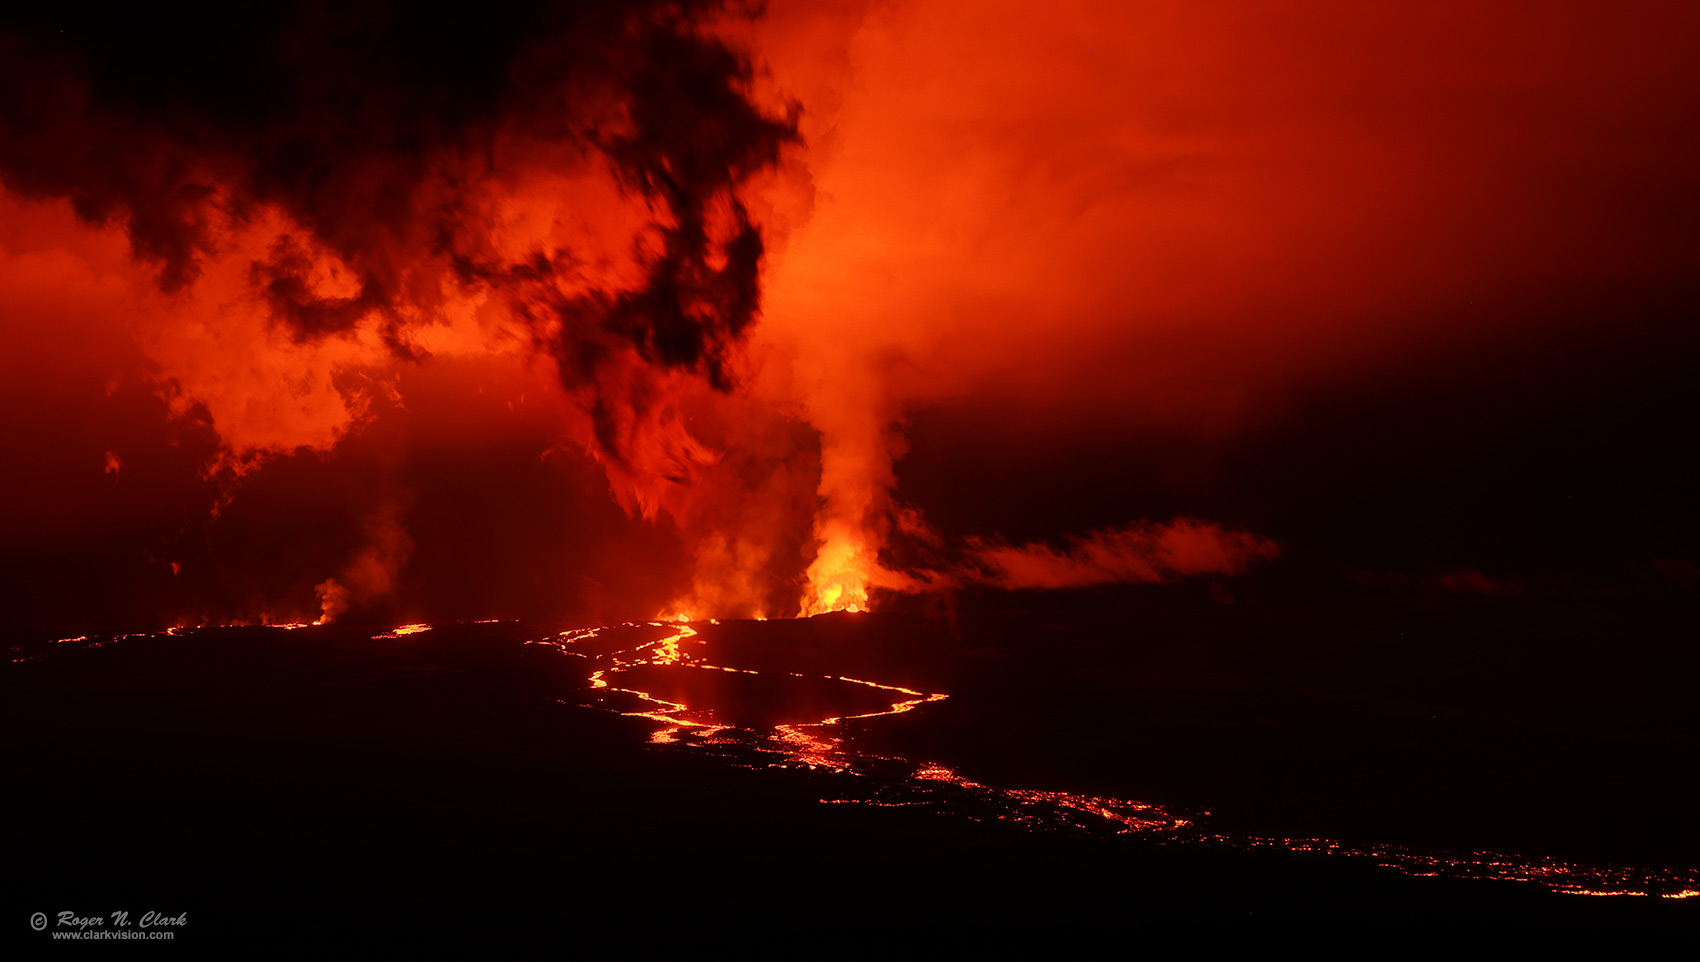 image mauna-loa-eruption-rnclark-c11-30-2022-4C3A2900.cj1-1700s.jpg is Copyrighted by Roger N. Clark, www.clarkvision.com